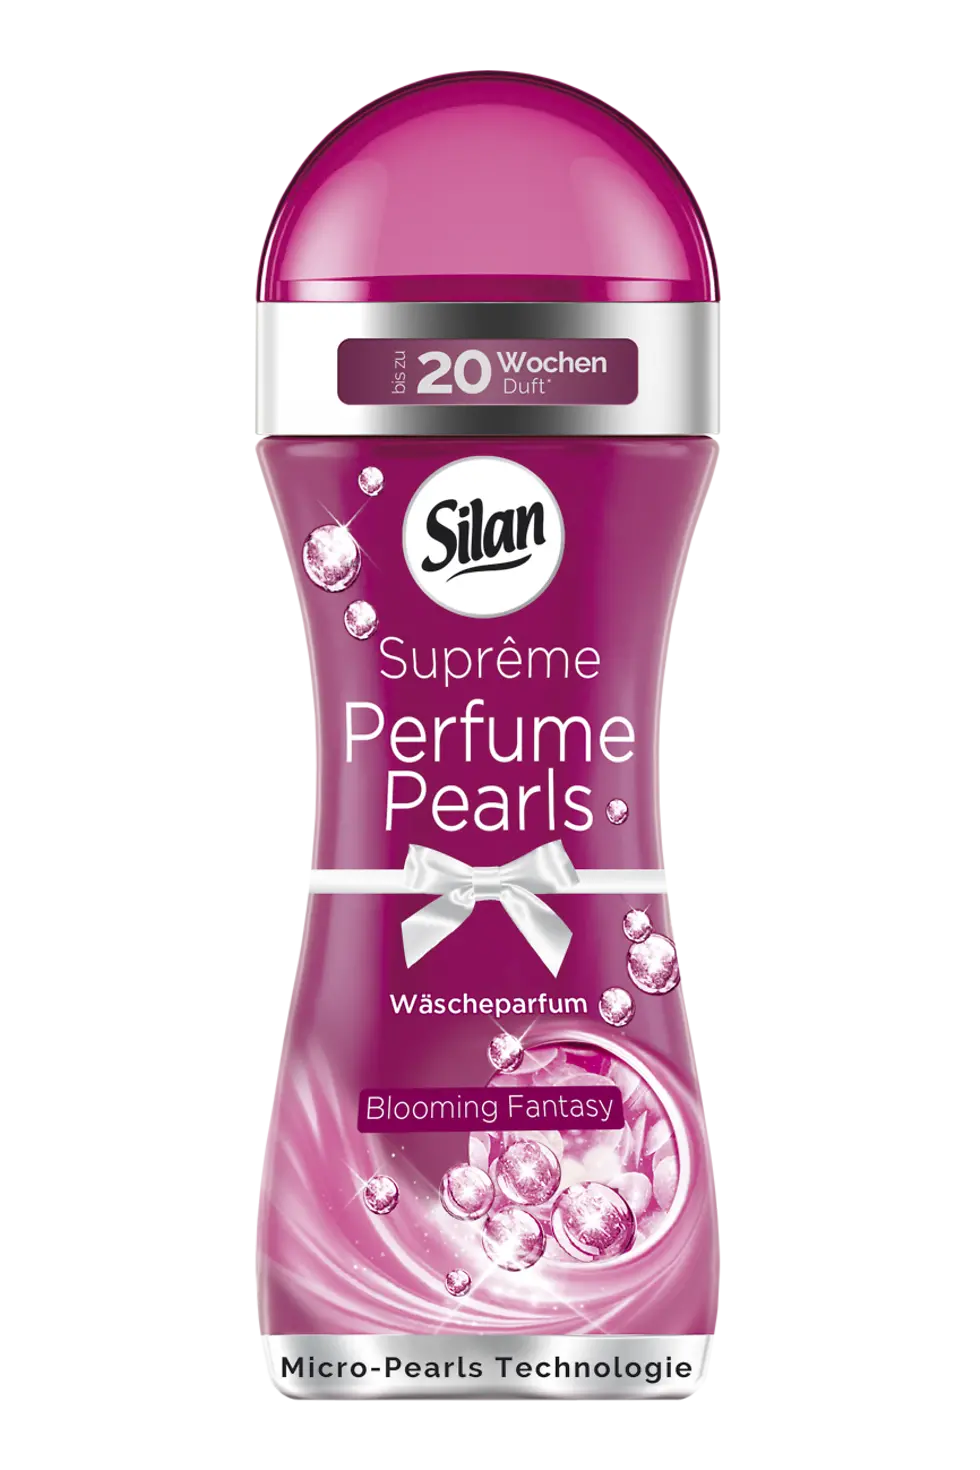 Silan Suprême Perfume Pearls